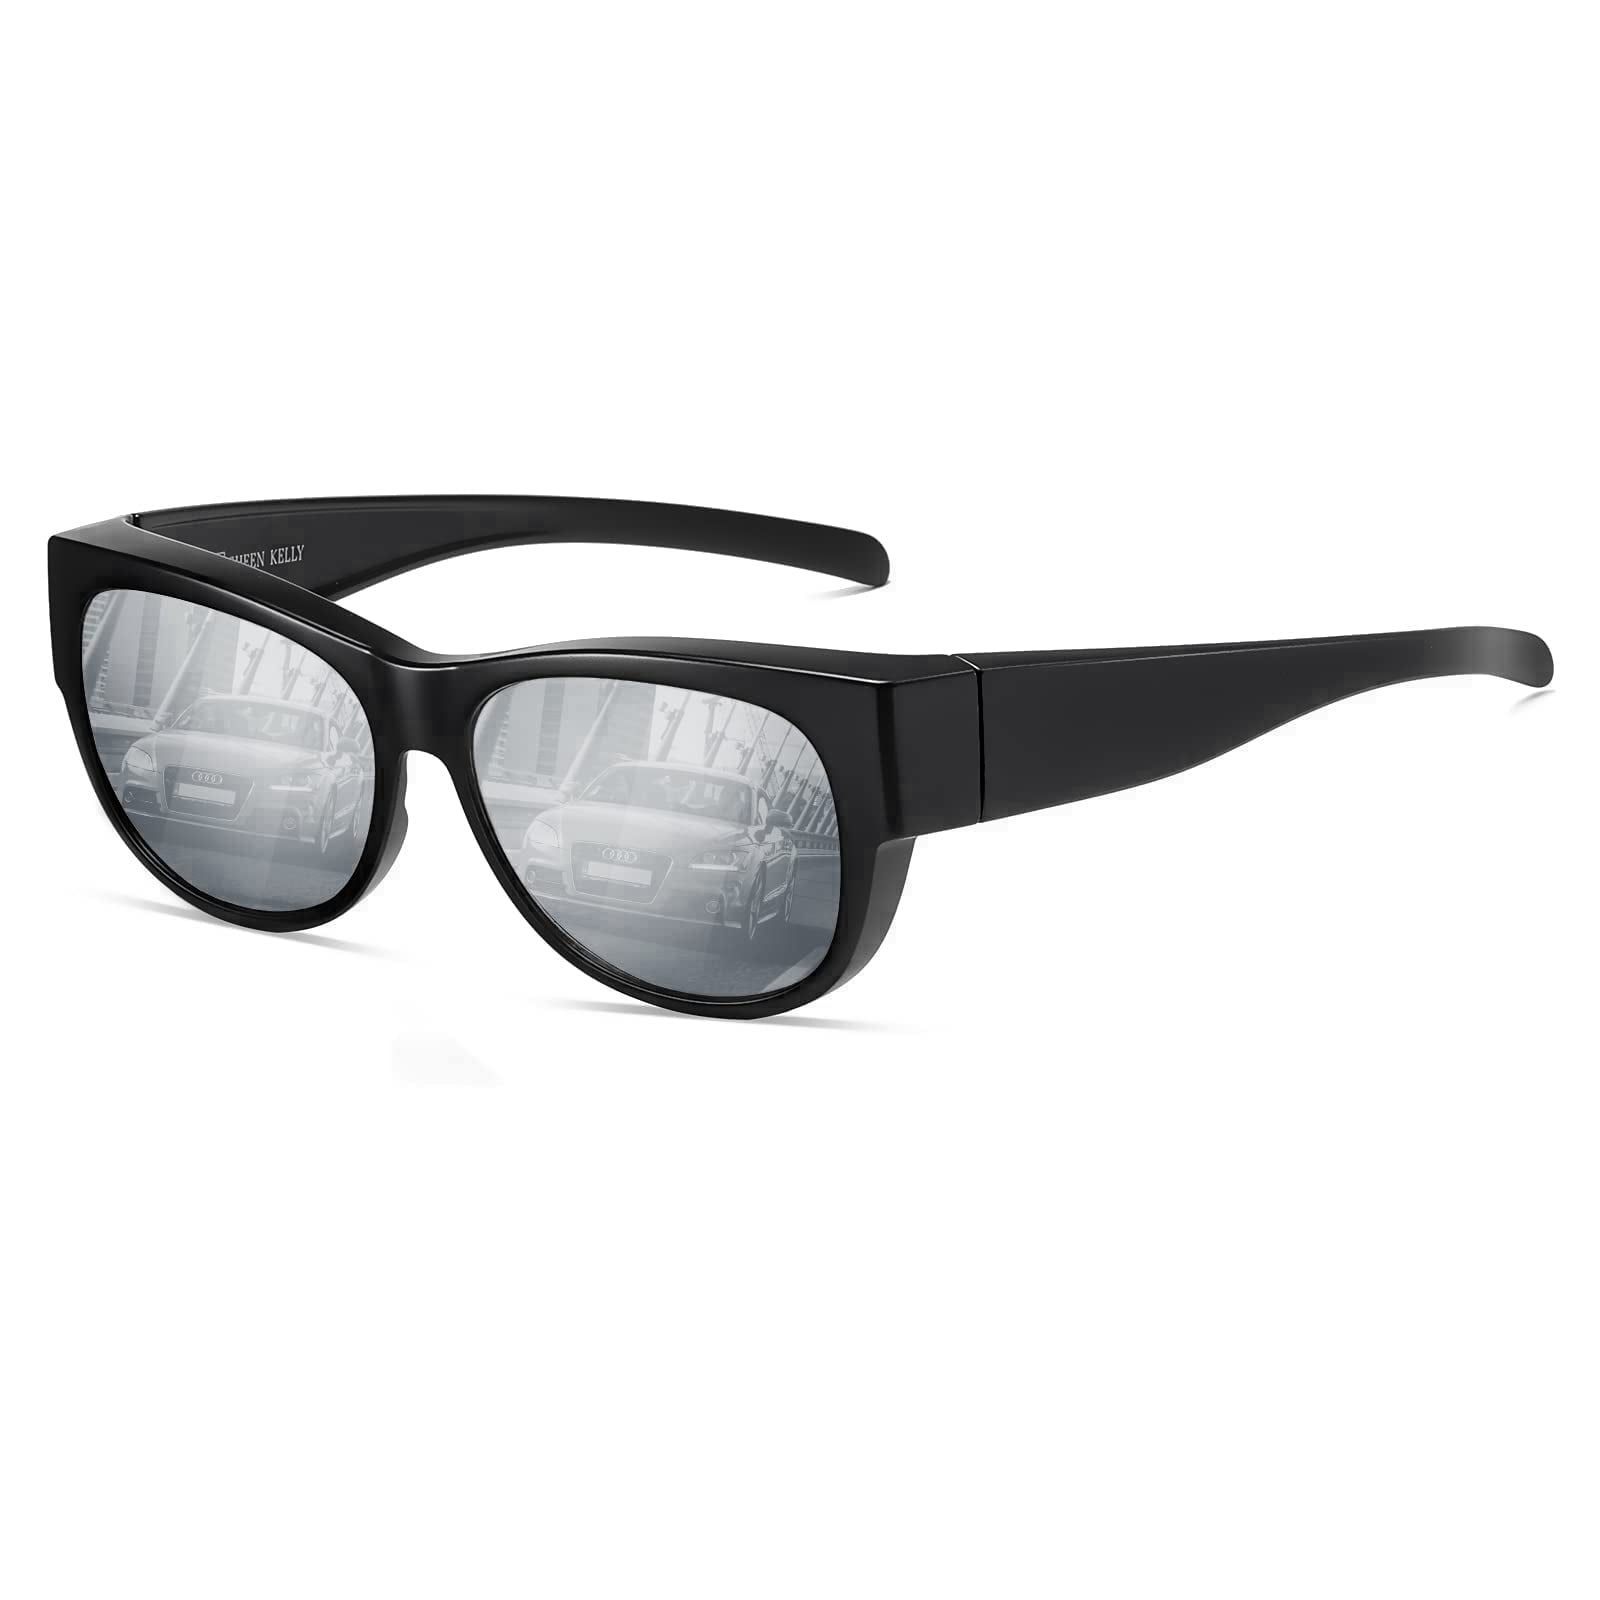 Sheen Kelly Oversized Polarized Fit Over Sunglasses Women Men Tr90 